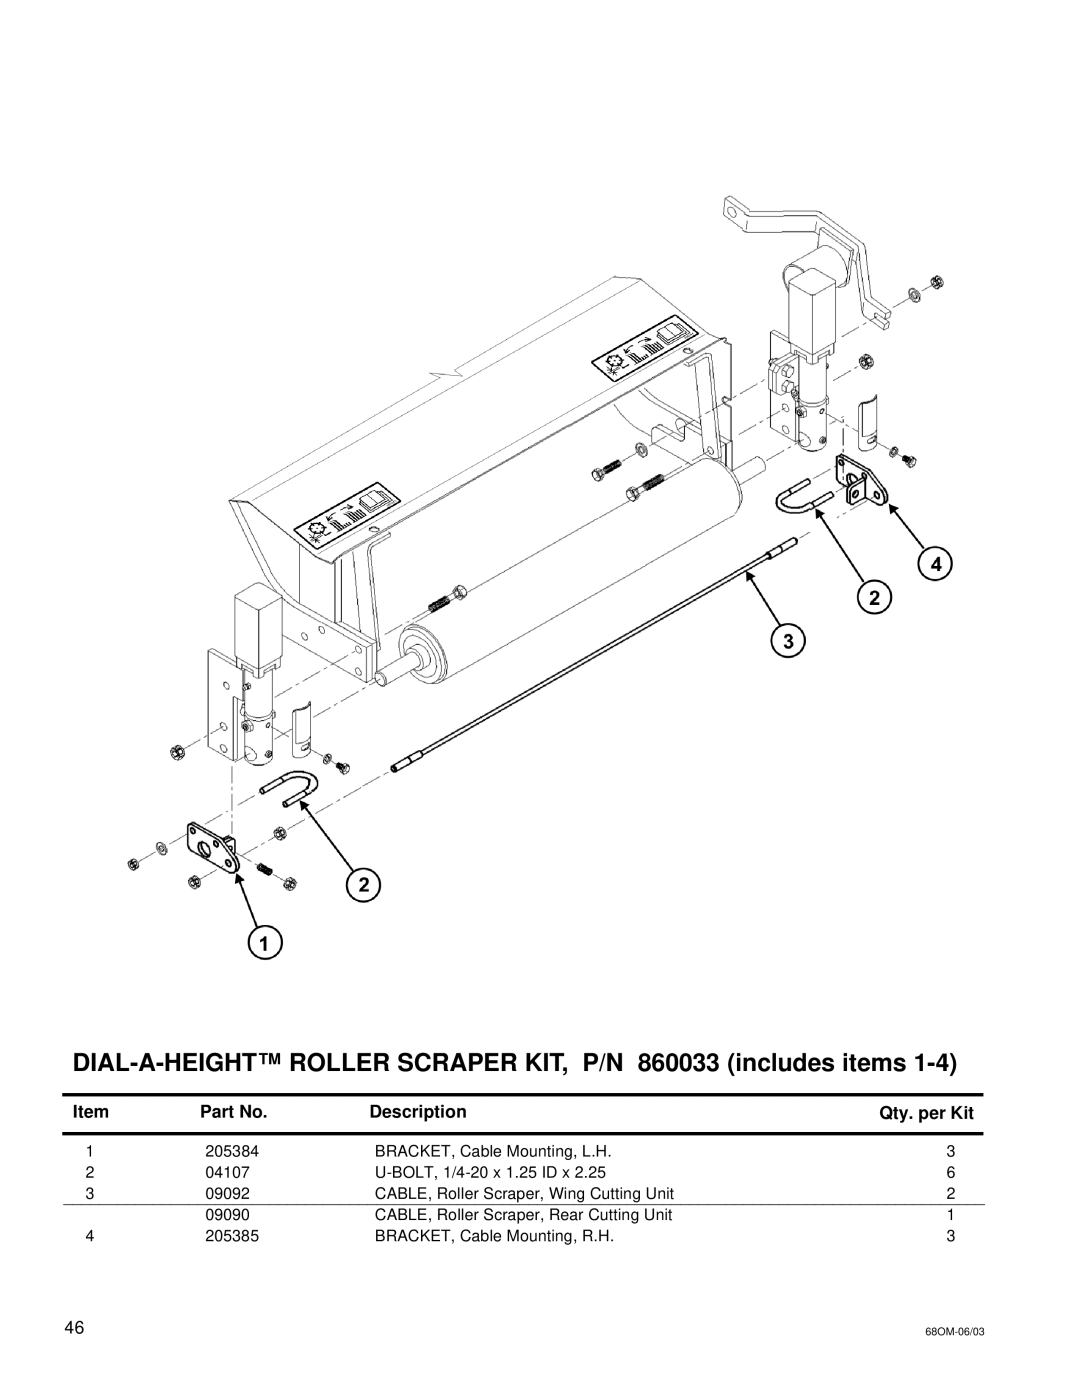 National Mower 68 SR, 68 DL DIAL-A-HEIGHT Roller Scraper KIT, P/N 860033 includes items, Description Qty. per Kit 